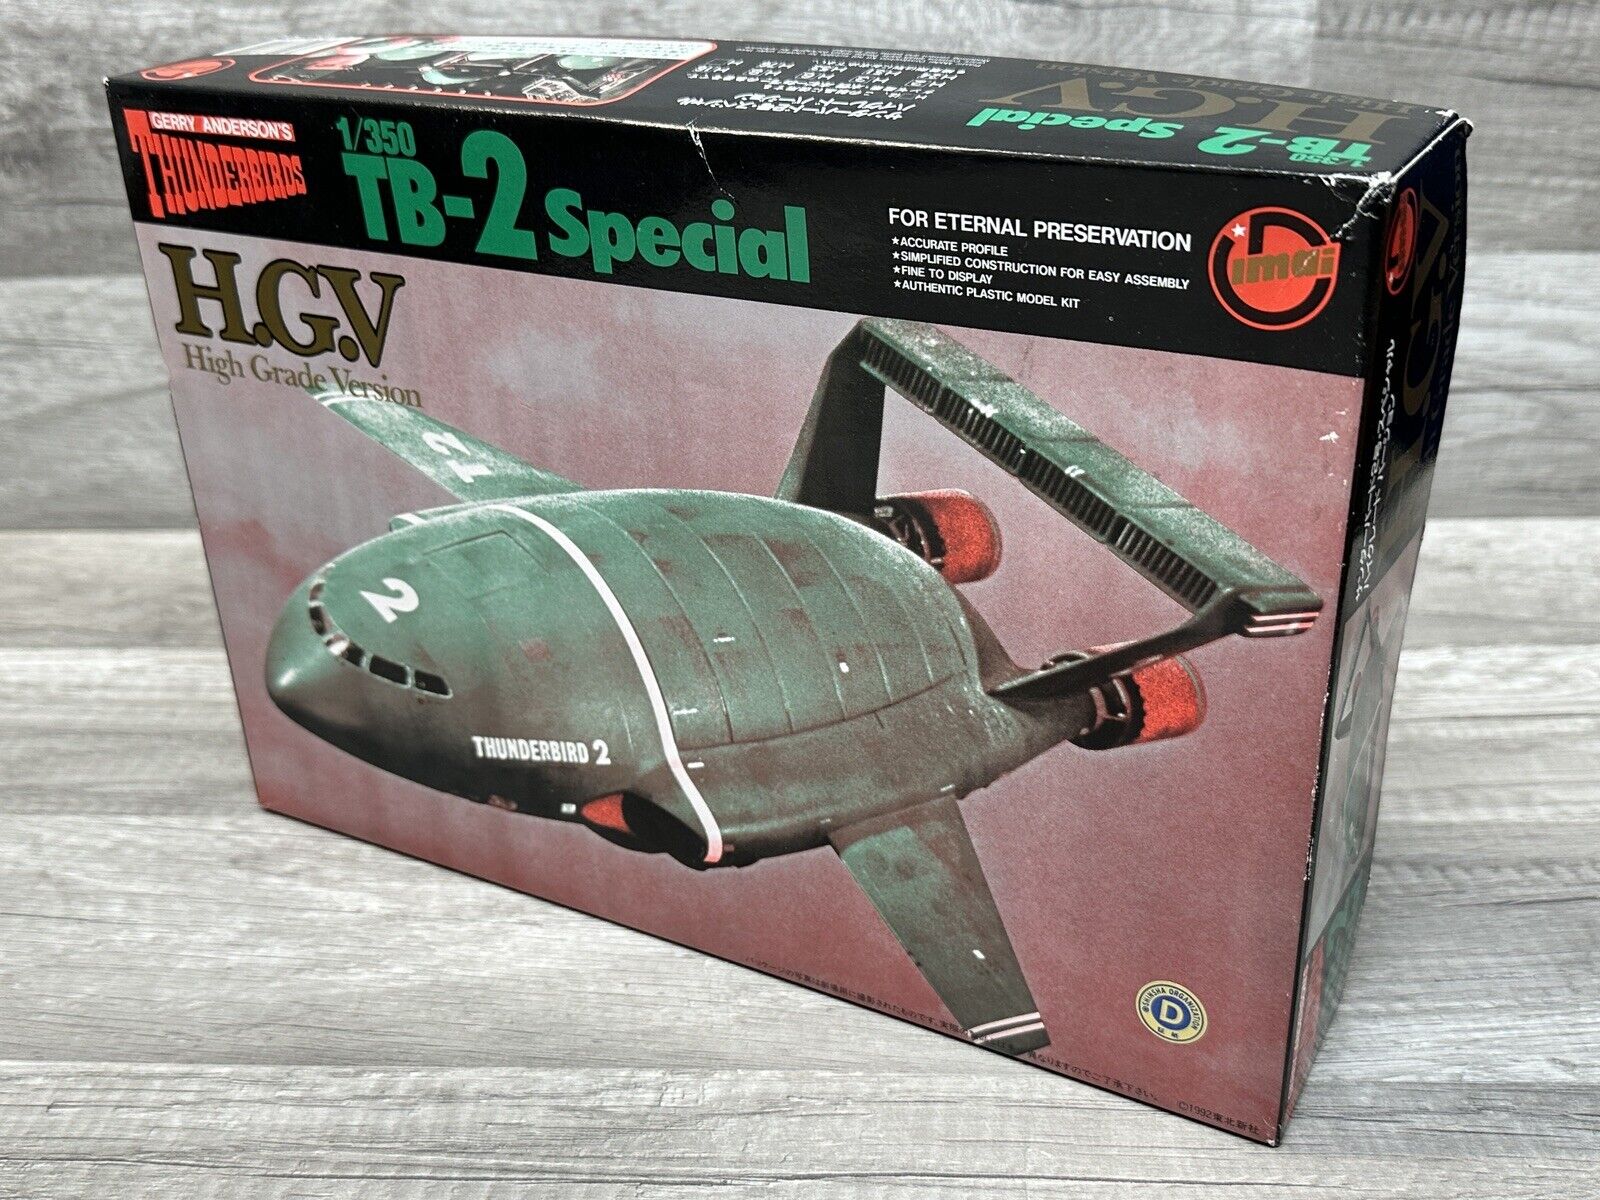 Imai 1/350 Thunderbird No. 2 Special HG Version TB-2